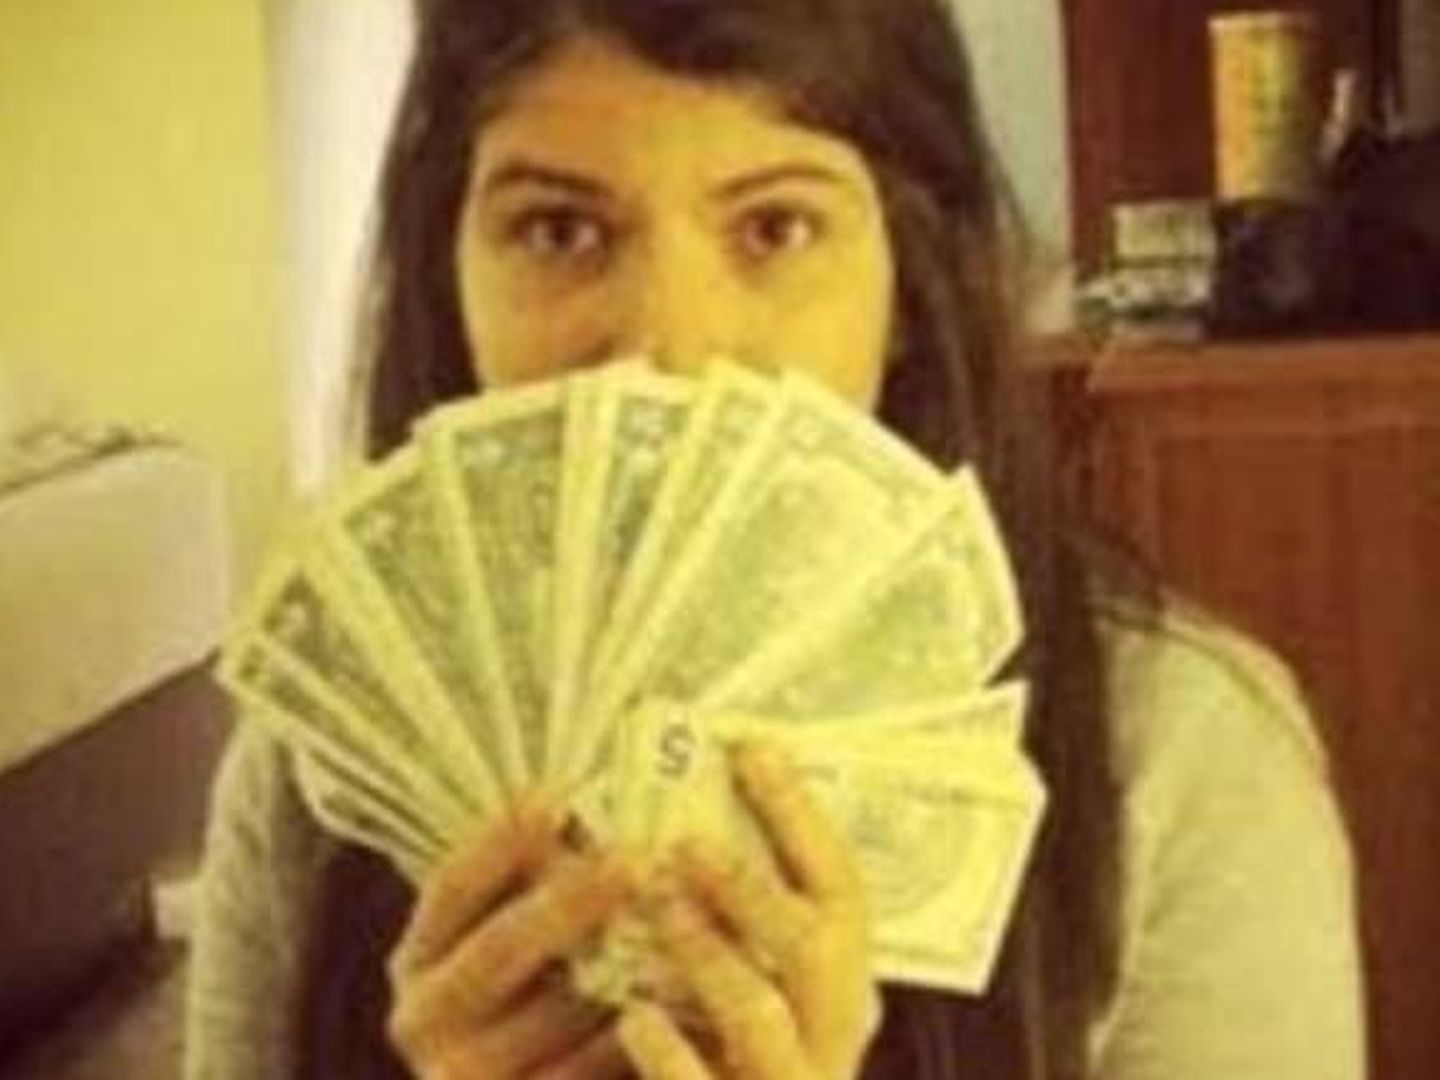 Rosines, alardeando de dinero. (Instagram)